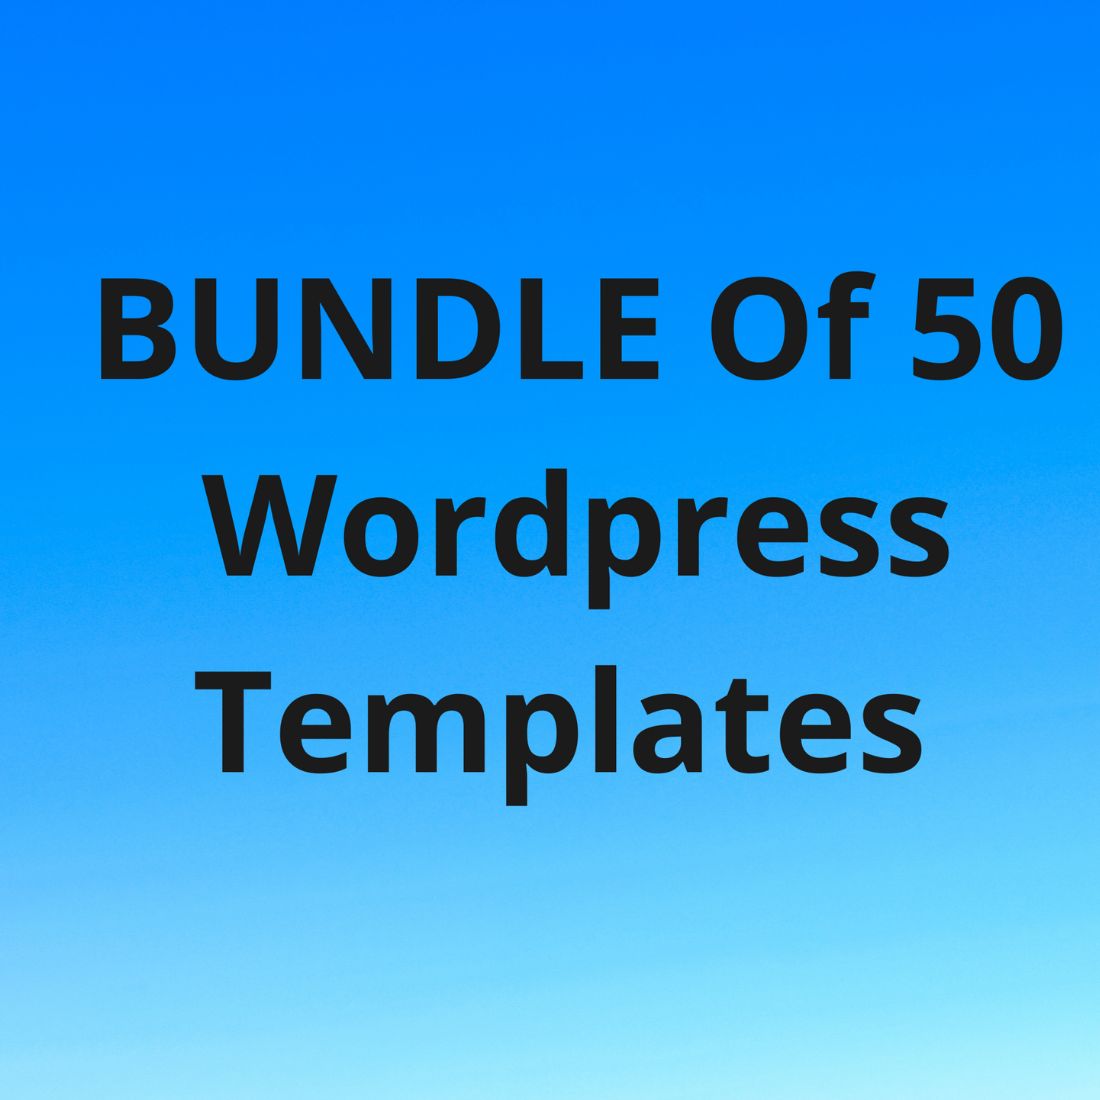 50 WordPress Template Bundle cover image.